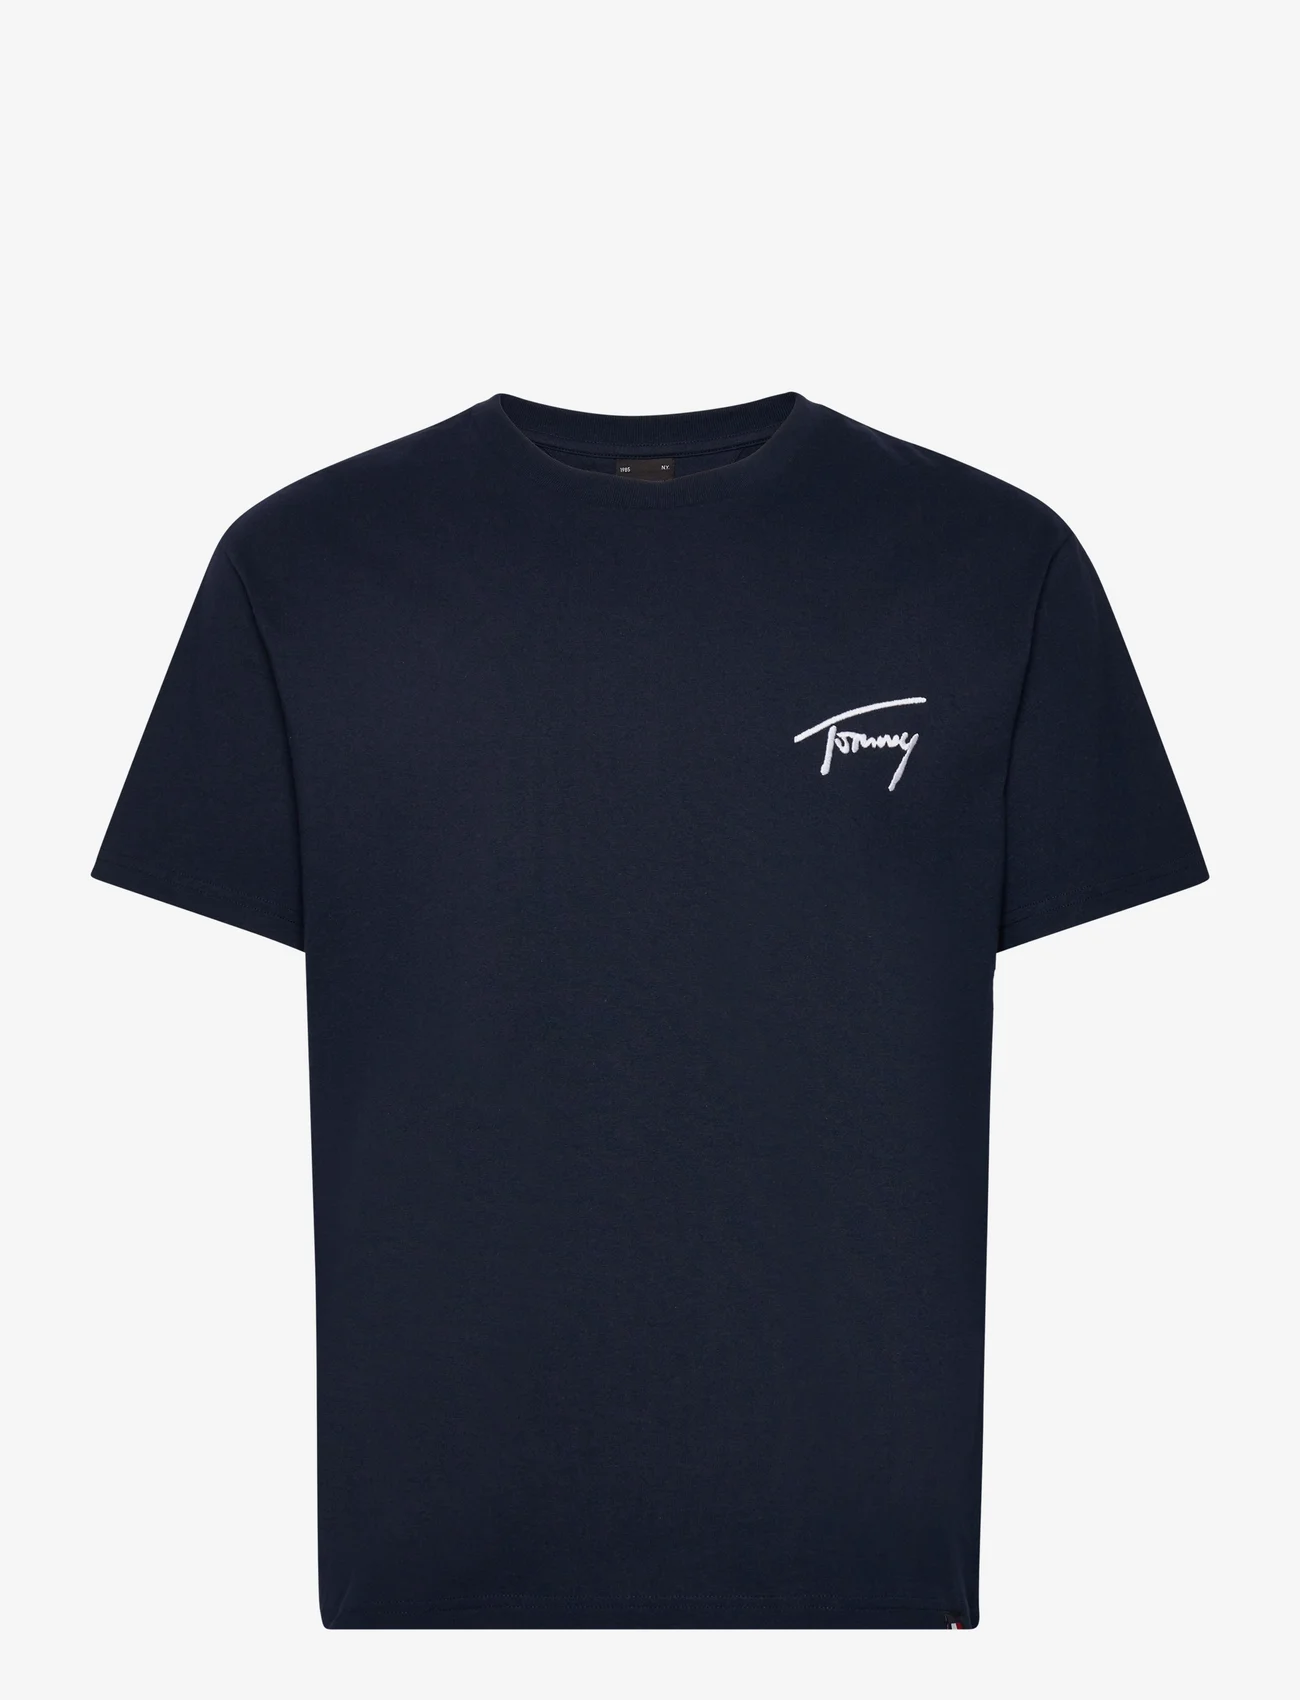 Tommy Jeans - TJM REG SIGNATURE TEE EXT - t-shirts - dark night navy - 0